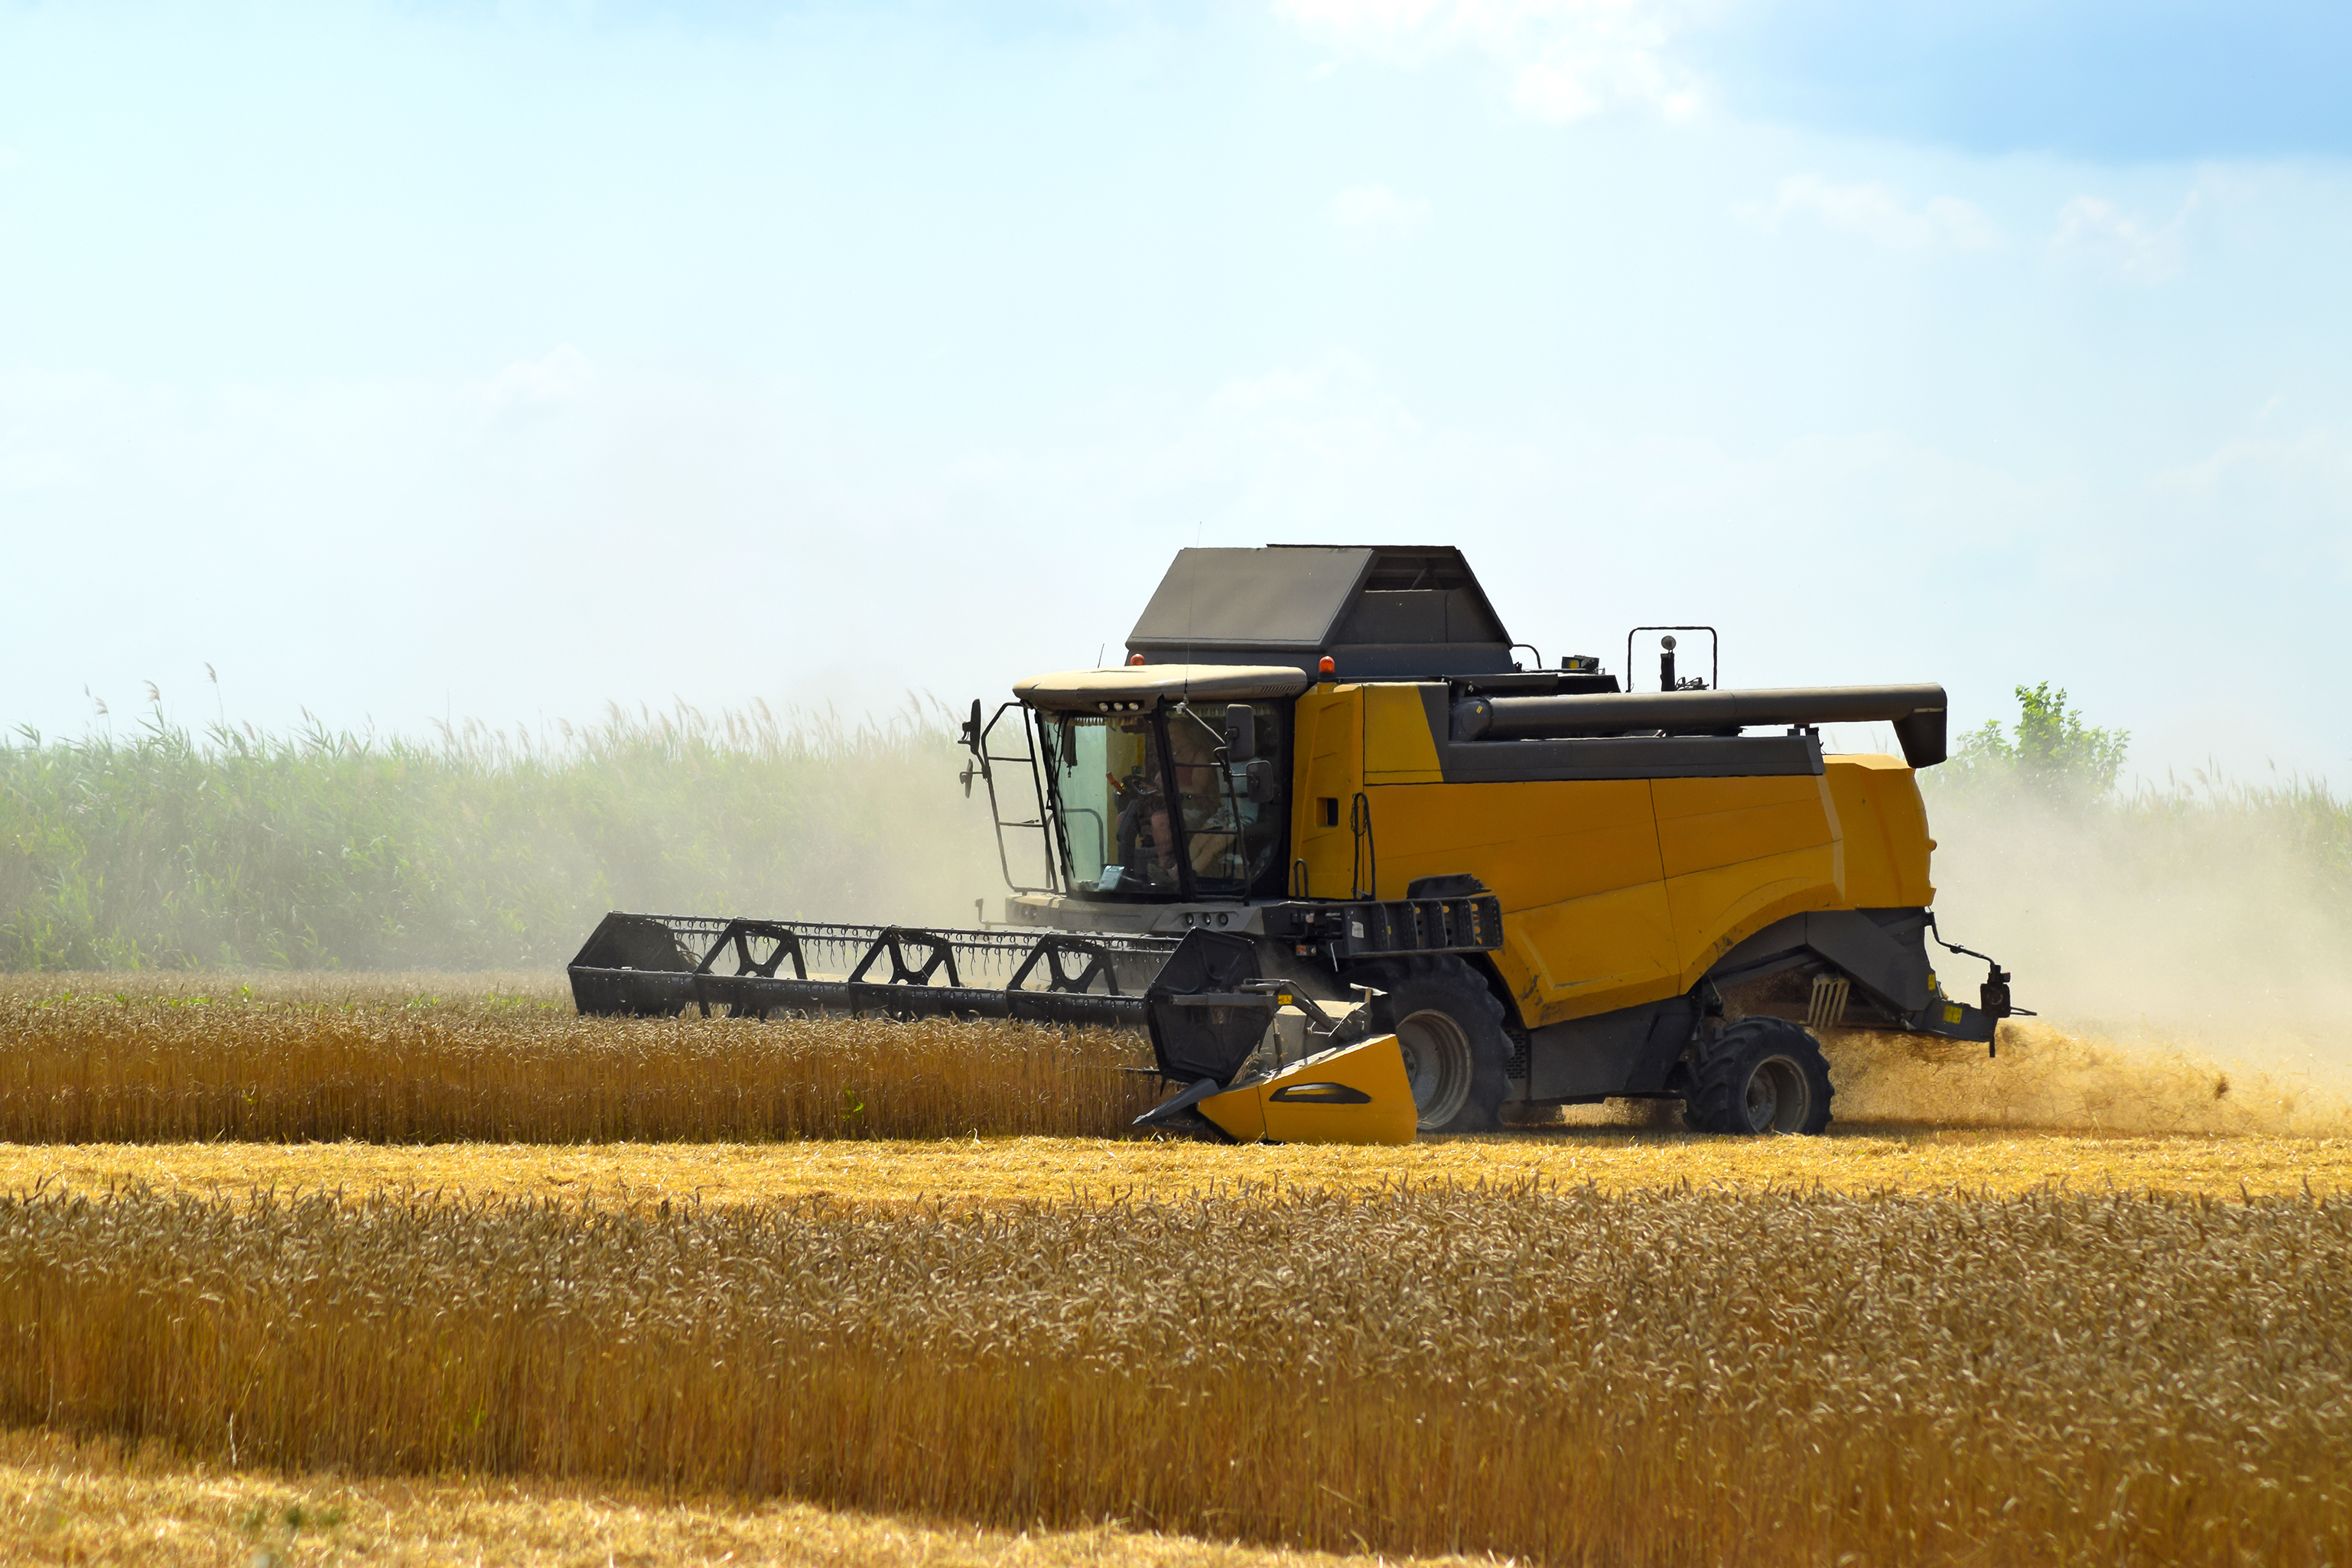 Farming harvesting equipment in wheat field